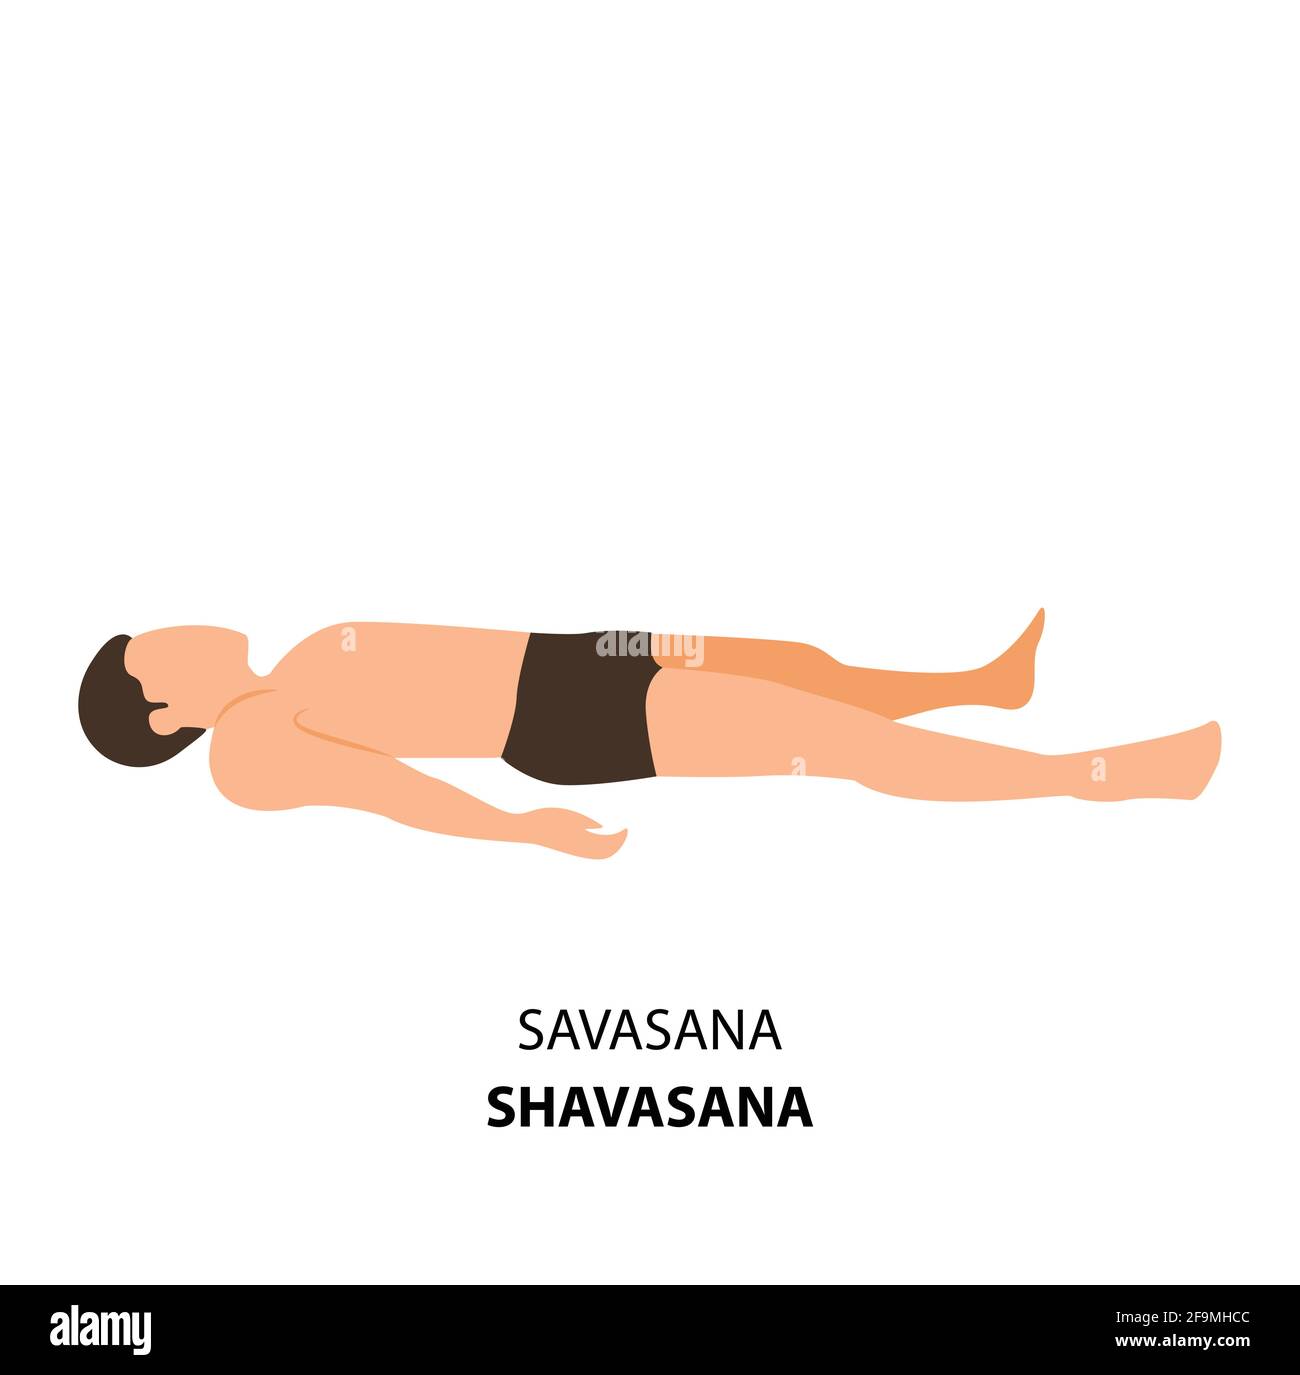 Man practicing yoga pose isolated Vector Illustration. Man lying on the ground in Shavasana Corpse Pose or Mrtasana, Yoga Asana icon Stock Vector